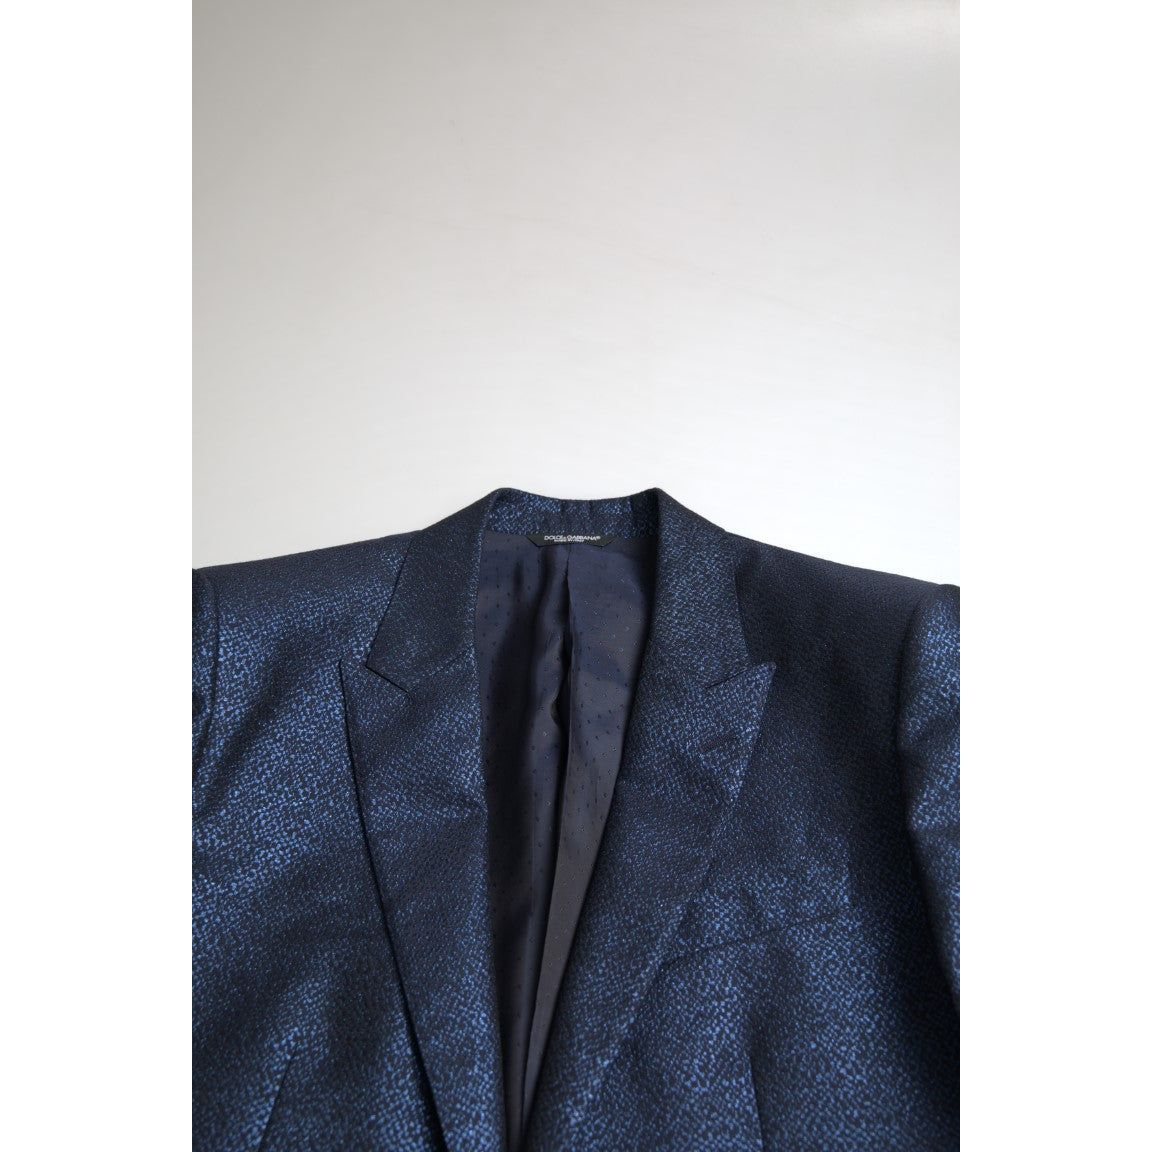 Dolce & Gabbana Metallic Blue Martini Slim Fit Suit blue-2-piece-single-breasted-martini-suit-3